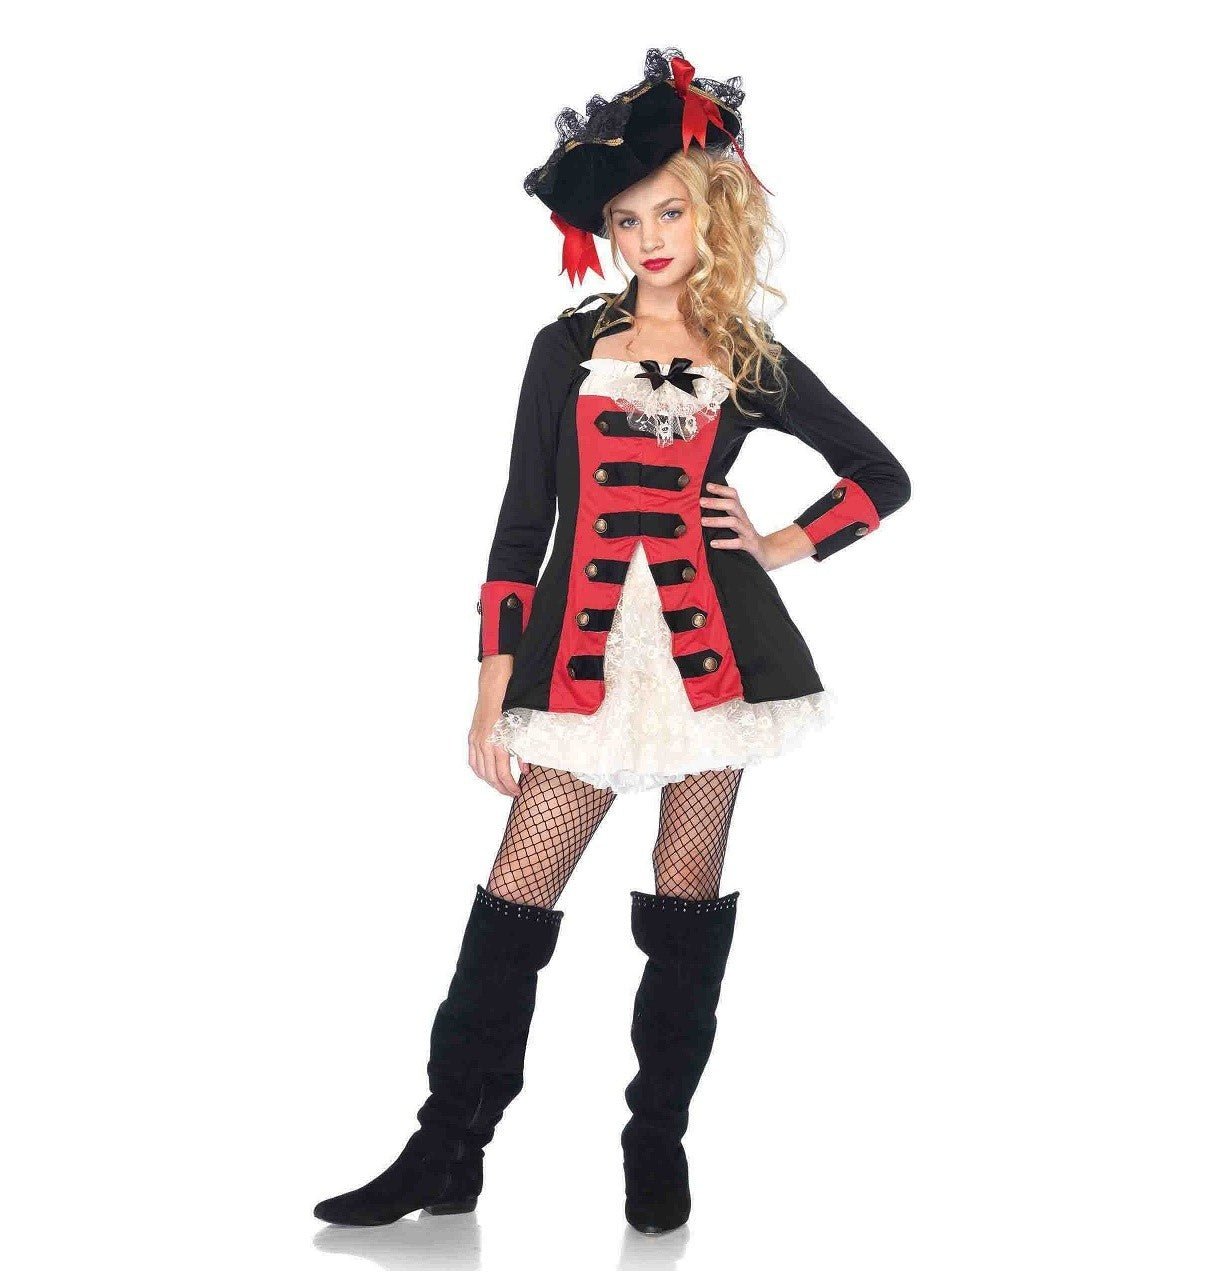 Costume Adolescente - Jolie Capitaine PirateParty Shop